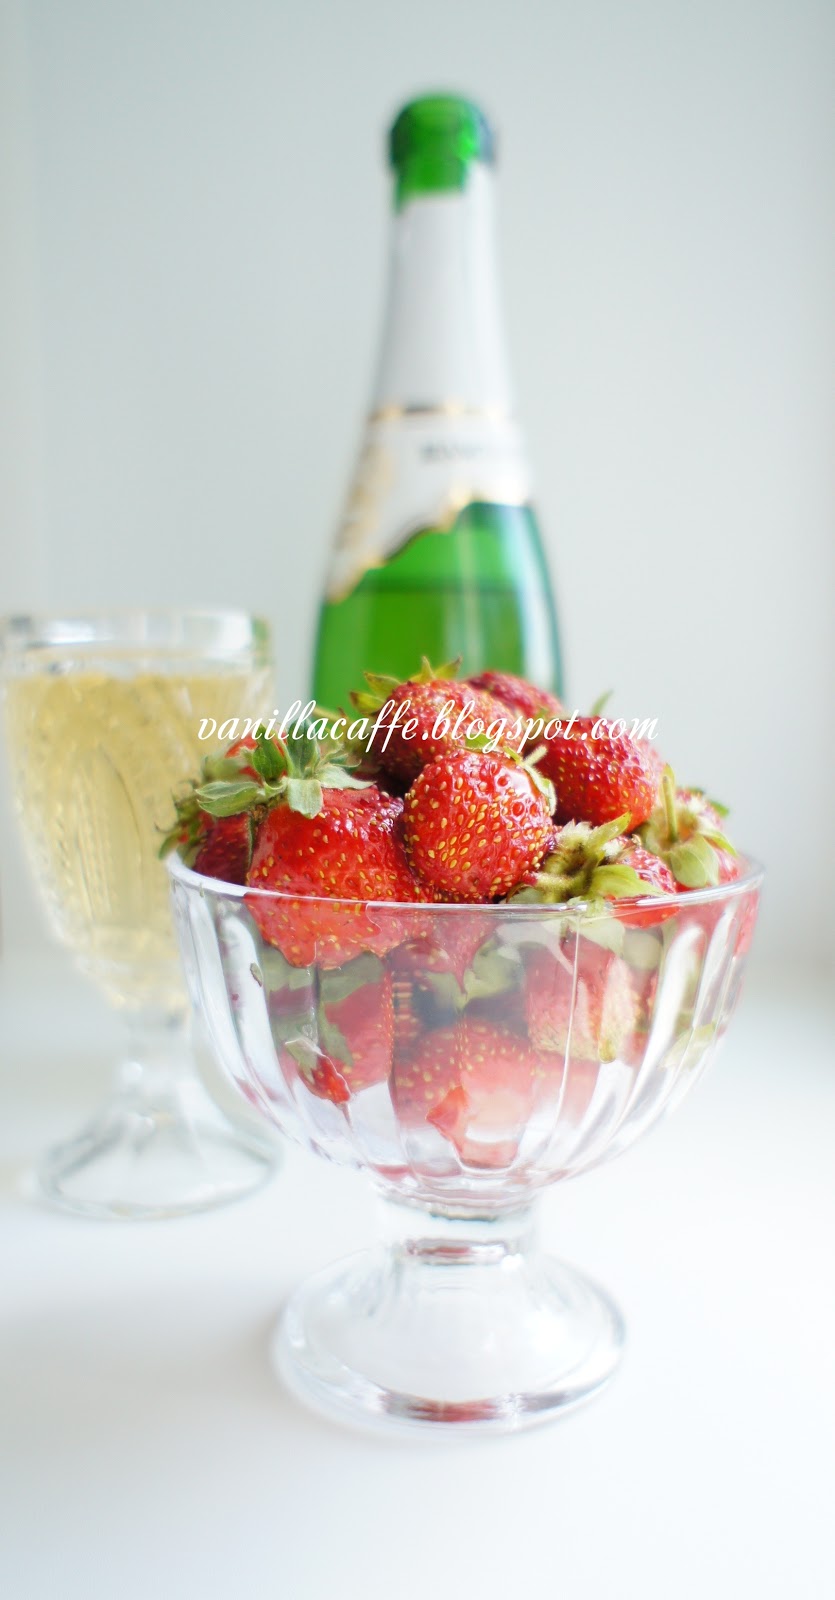 Maison strawberry champagne. Шампанское с клубникой. Холодное шампанское с клубникой. Клубника с шампанским. Шампанское клубника со сливками.